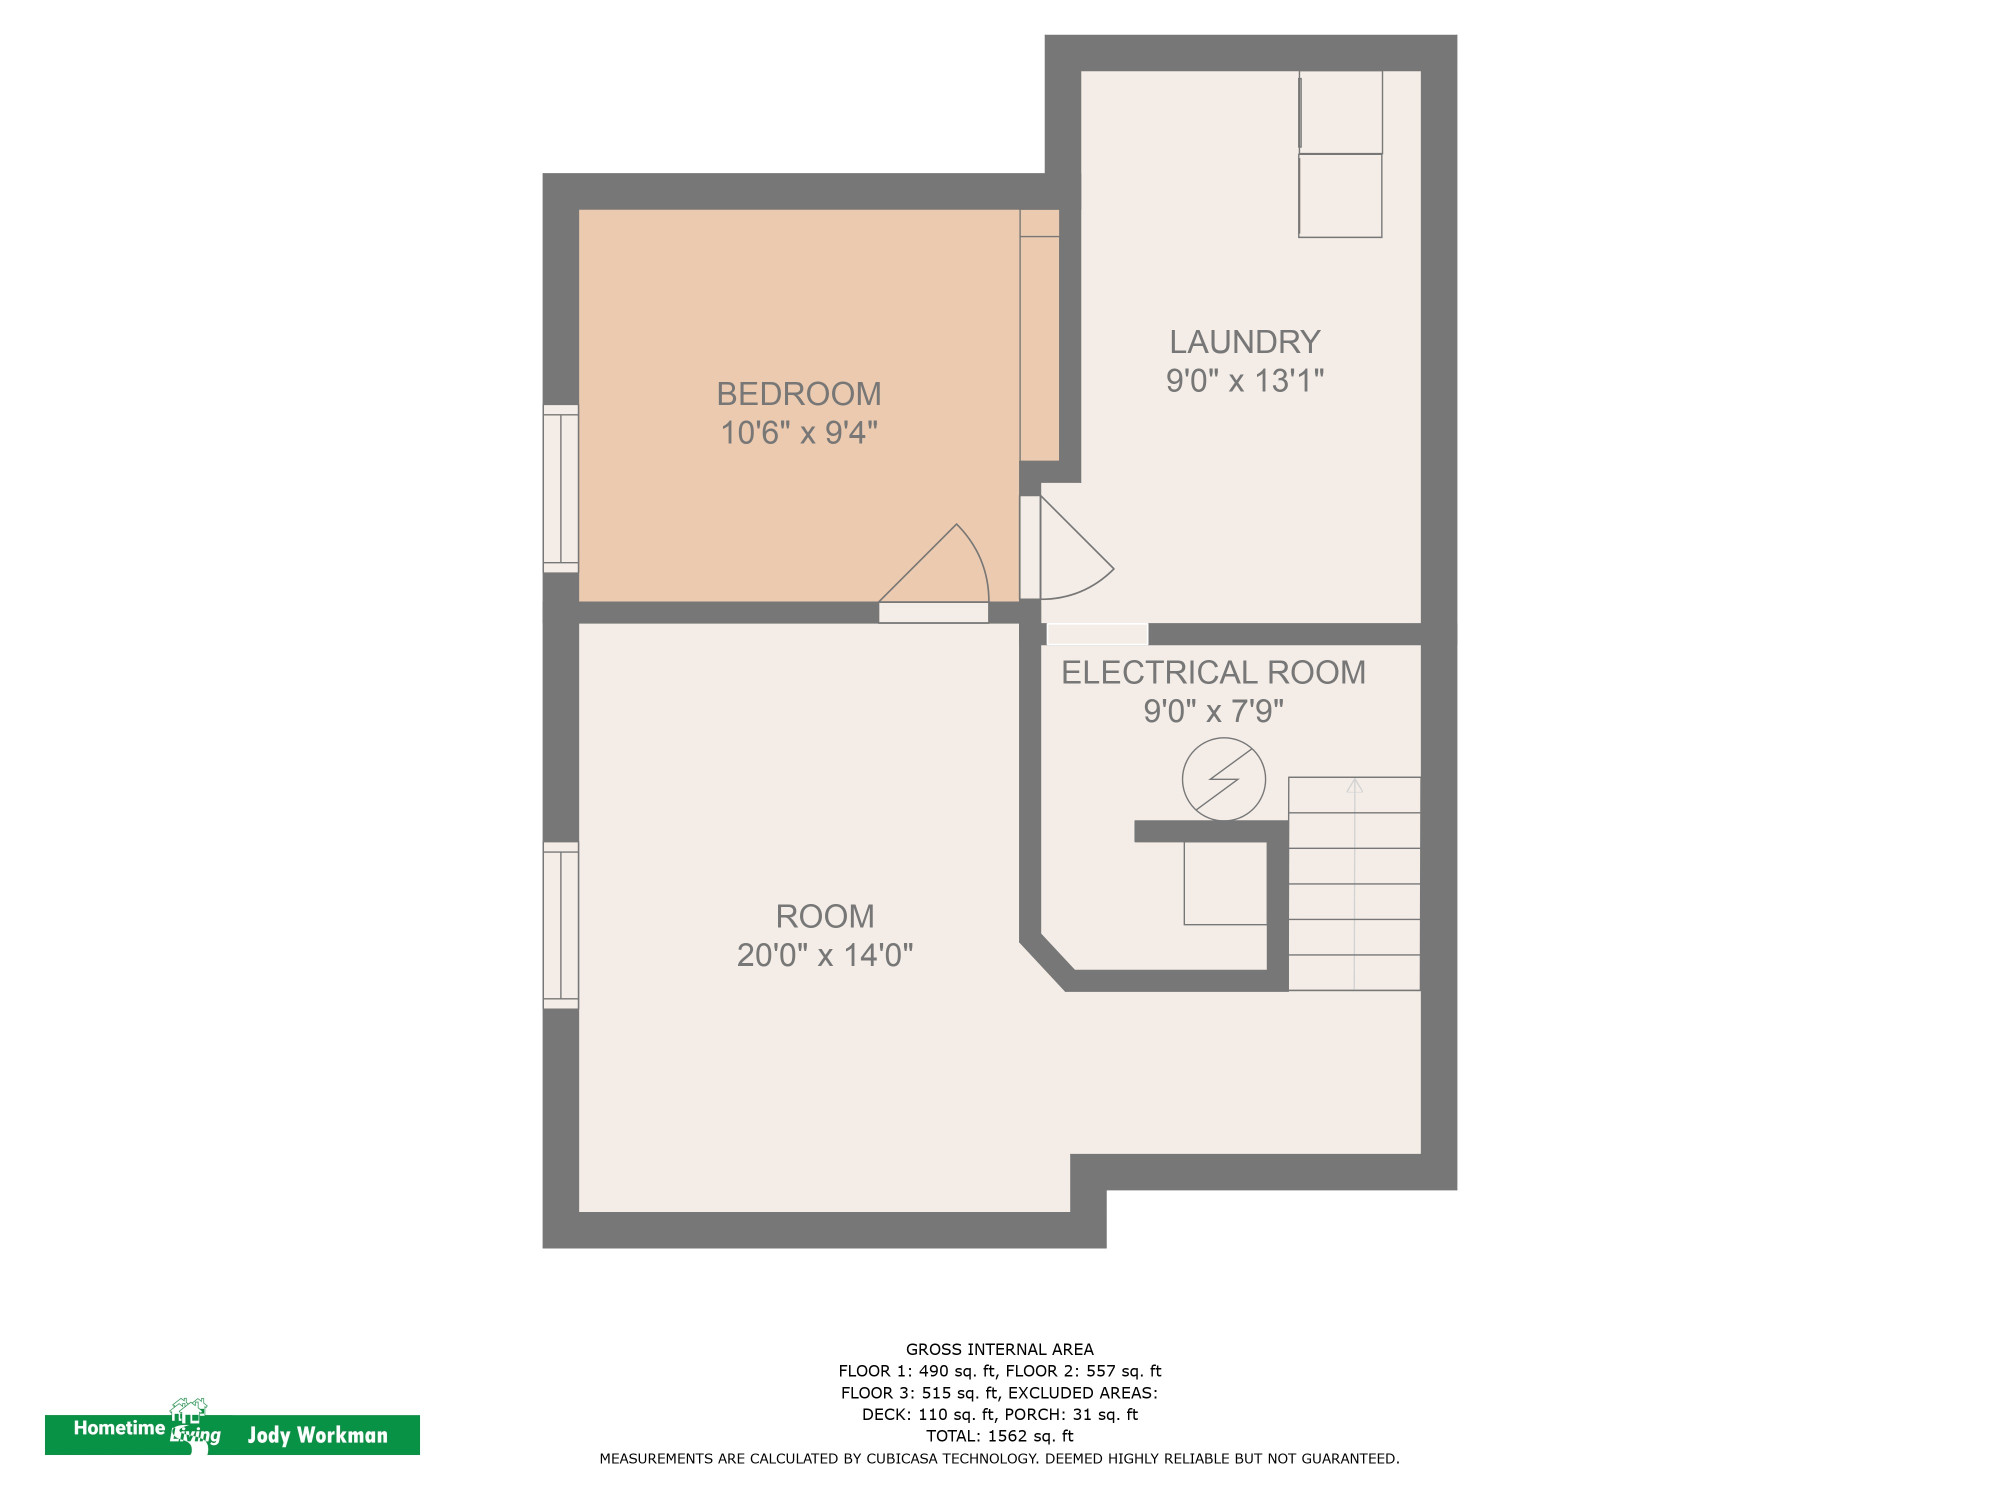 Basement Floor Plan Key Image